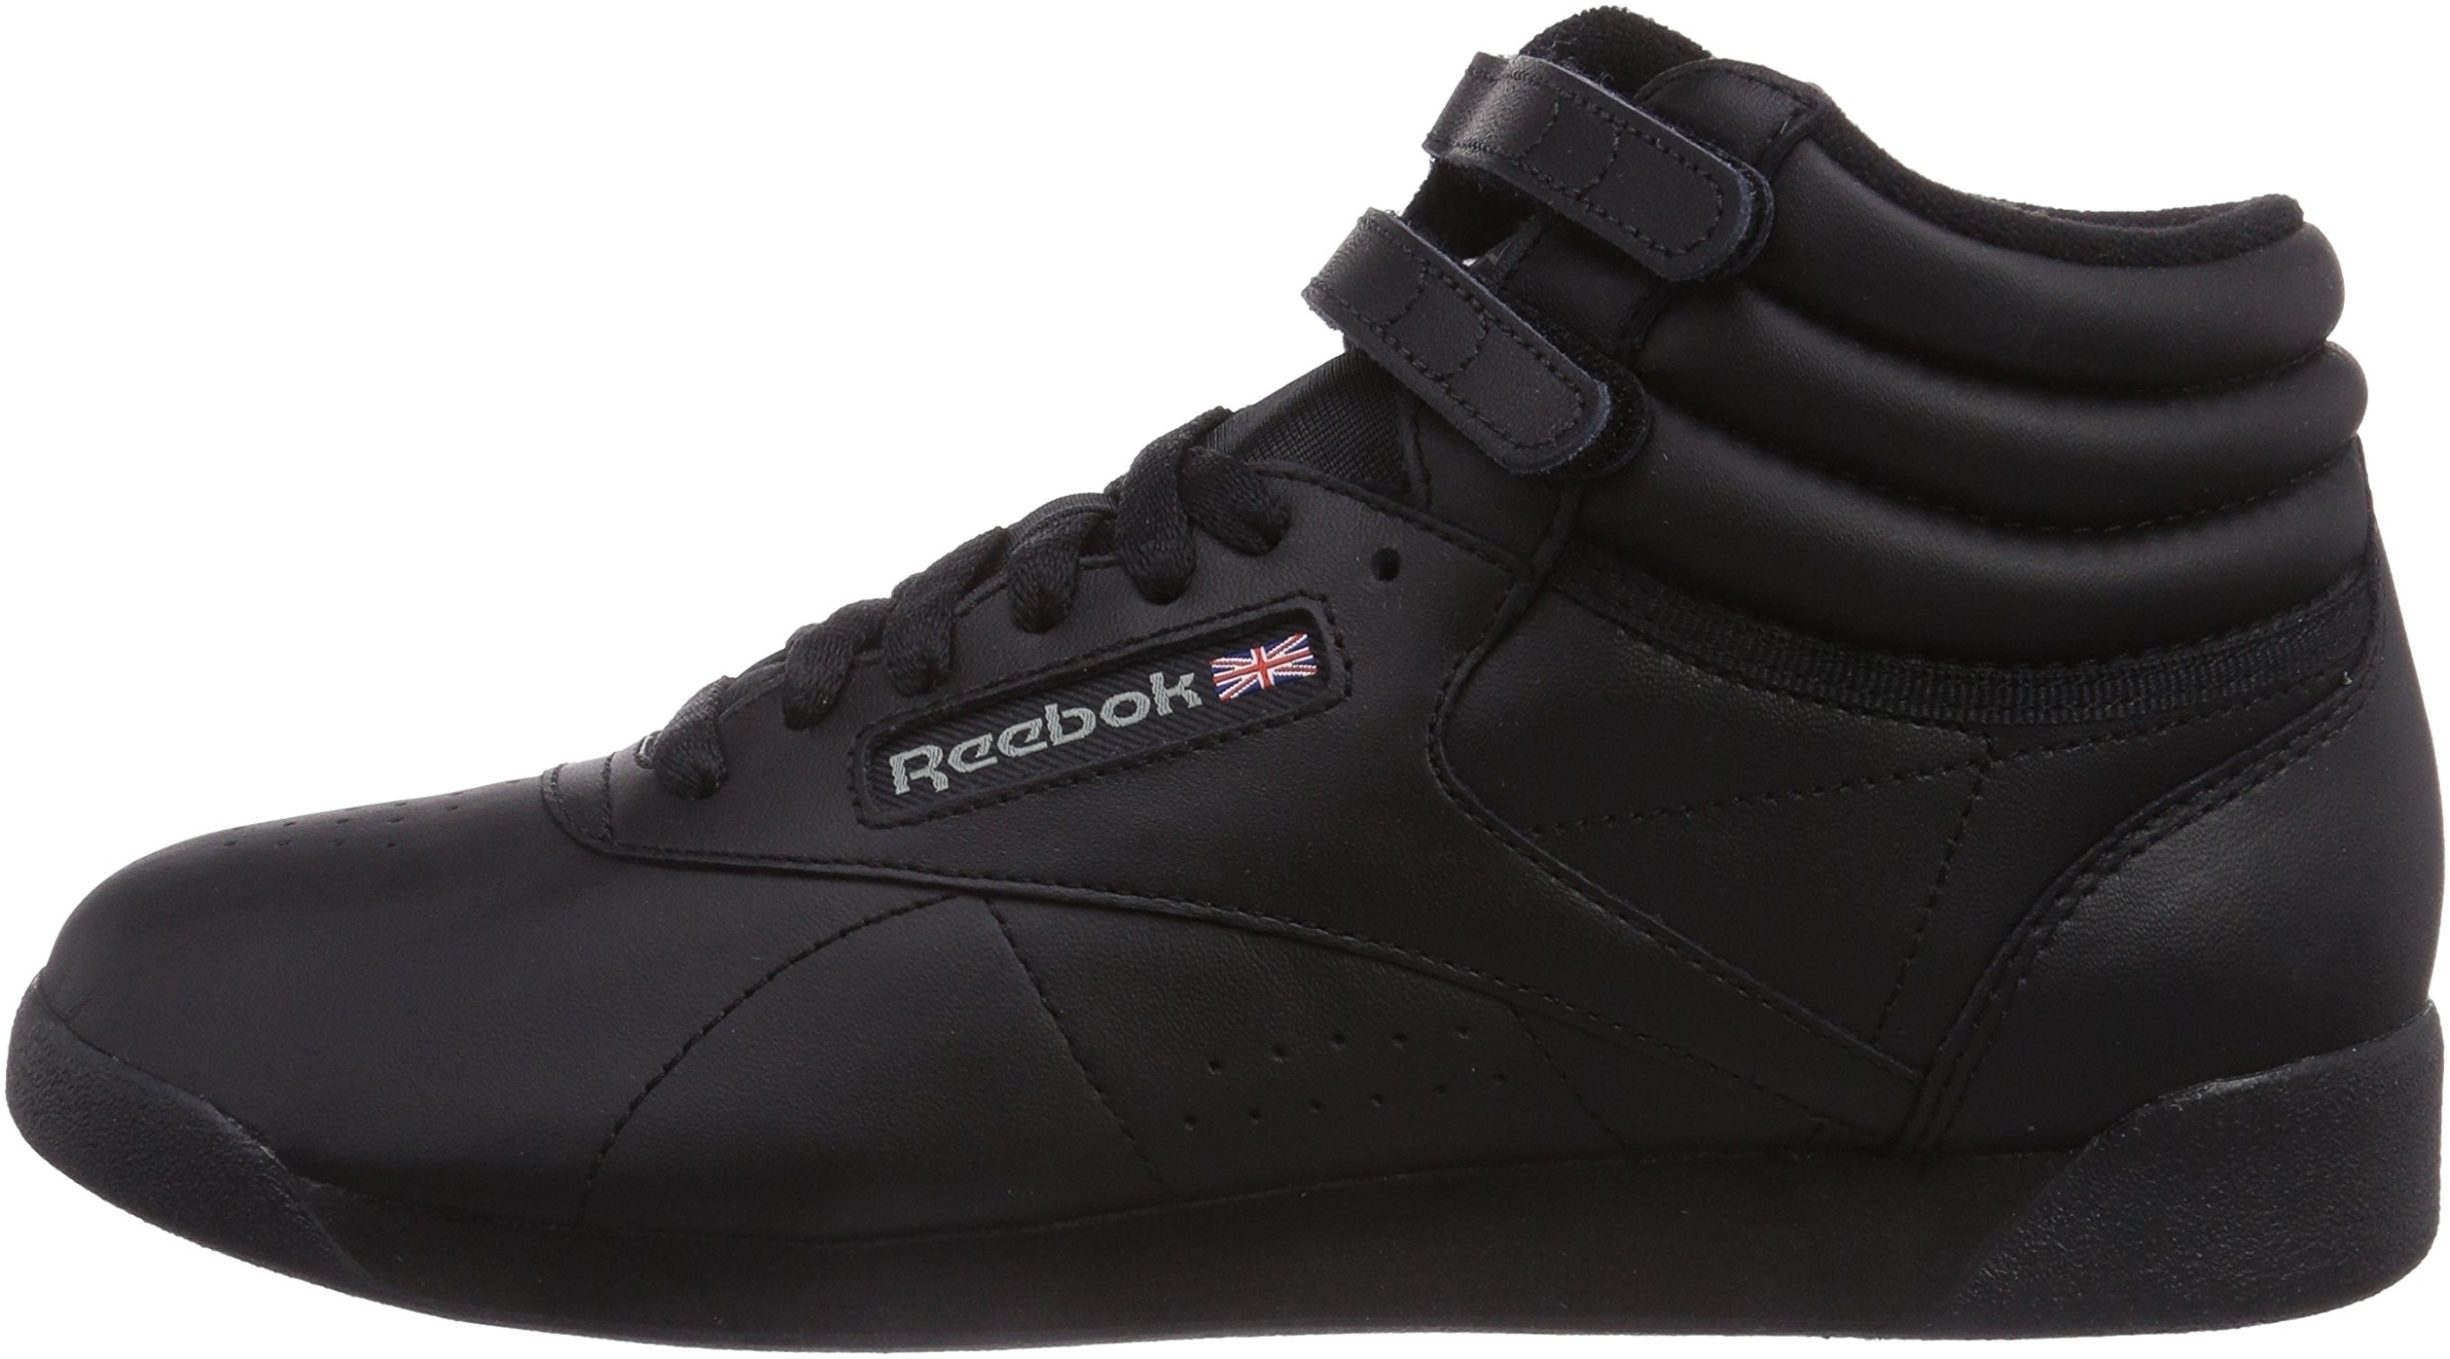 Reebok Wmns Freestyle Hi NBK Leather Damen Sneaker CN0604 Sportschuhe Schuhe NEU 